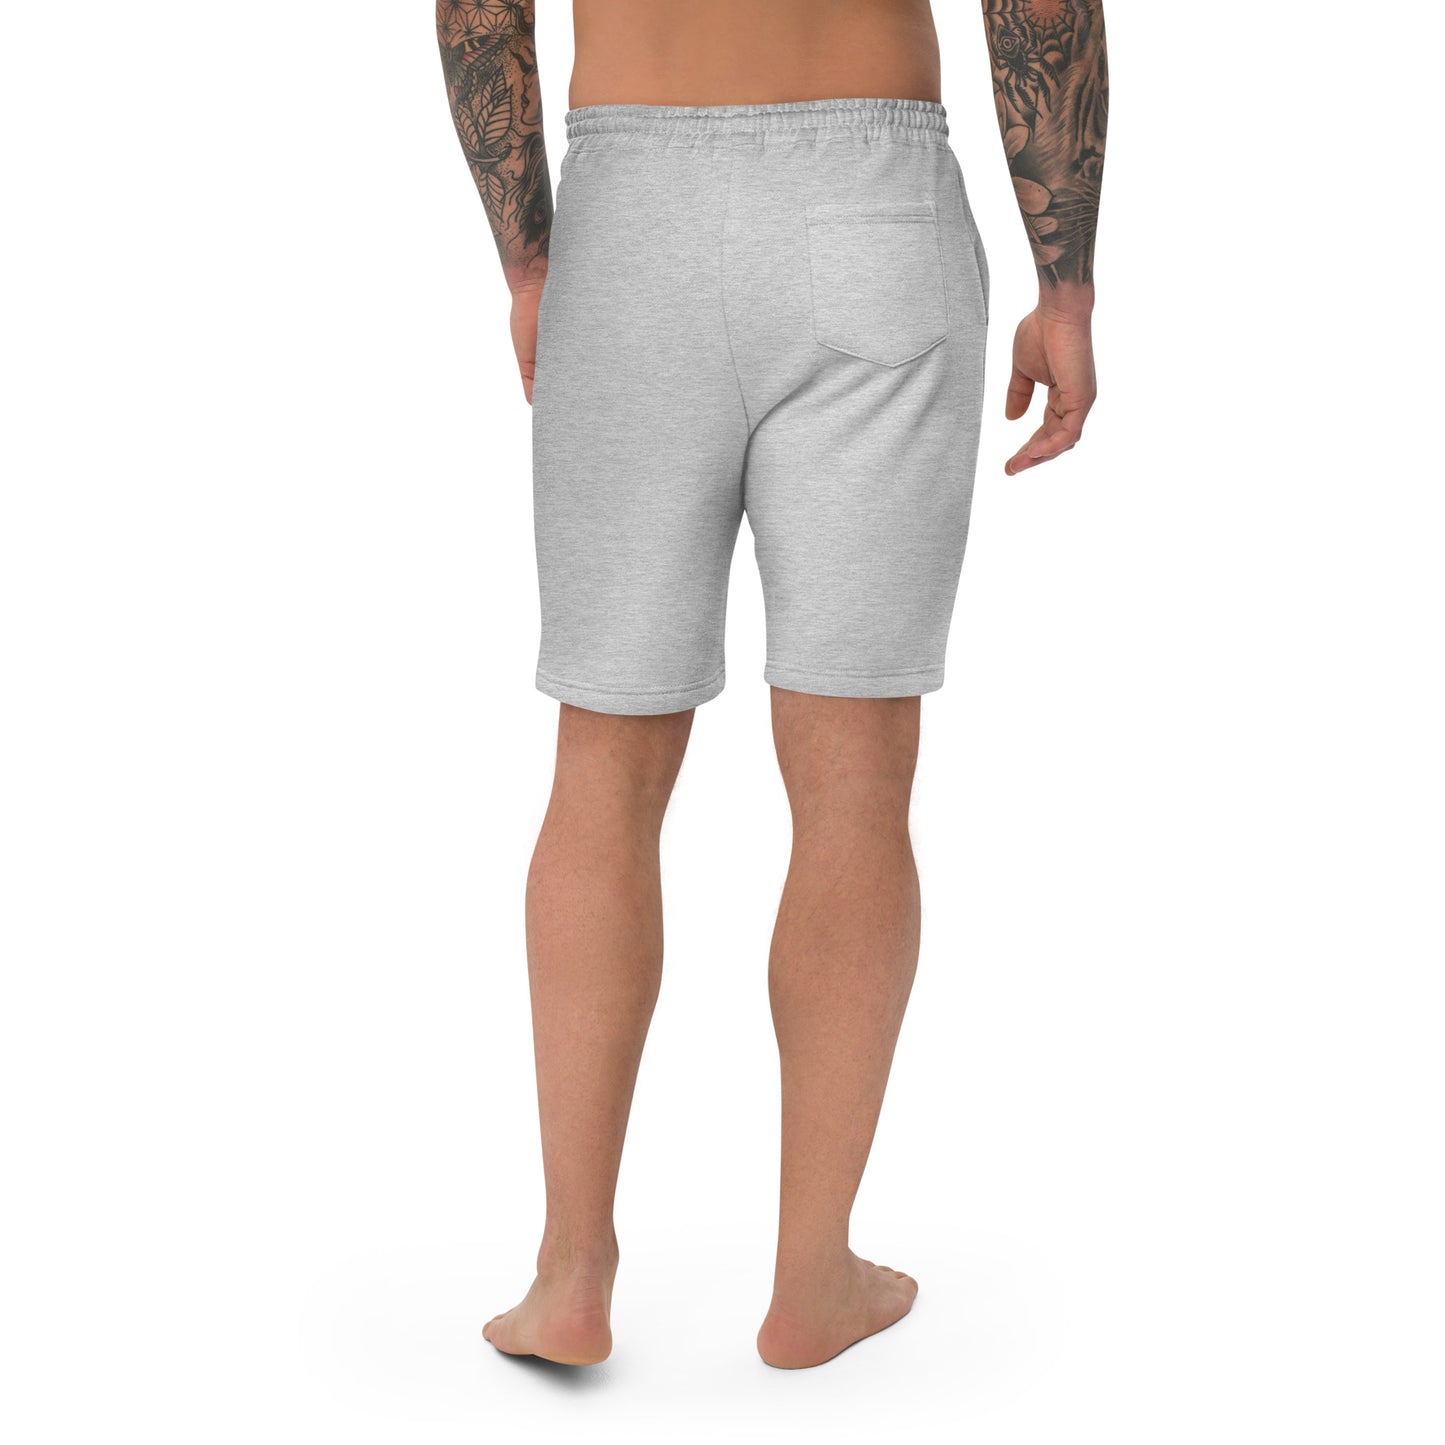 JR Trustno1 Stitched Men's fleece shorts